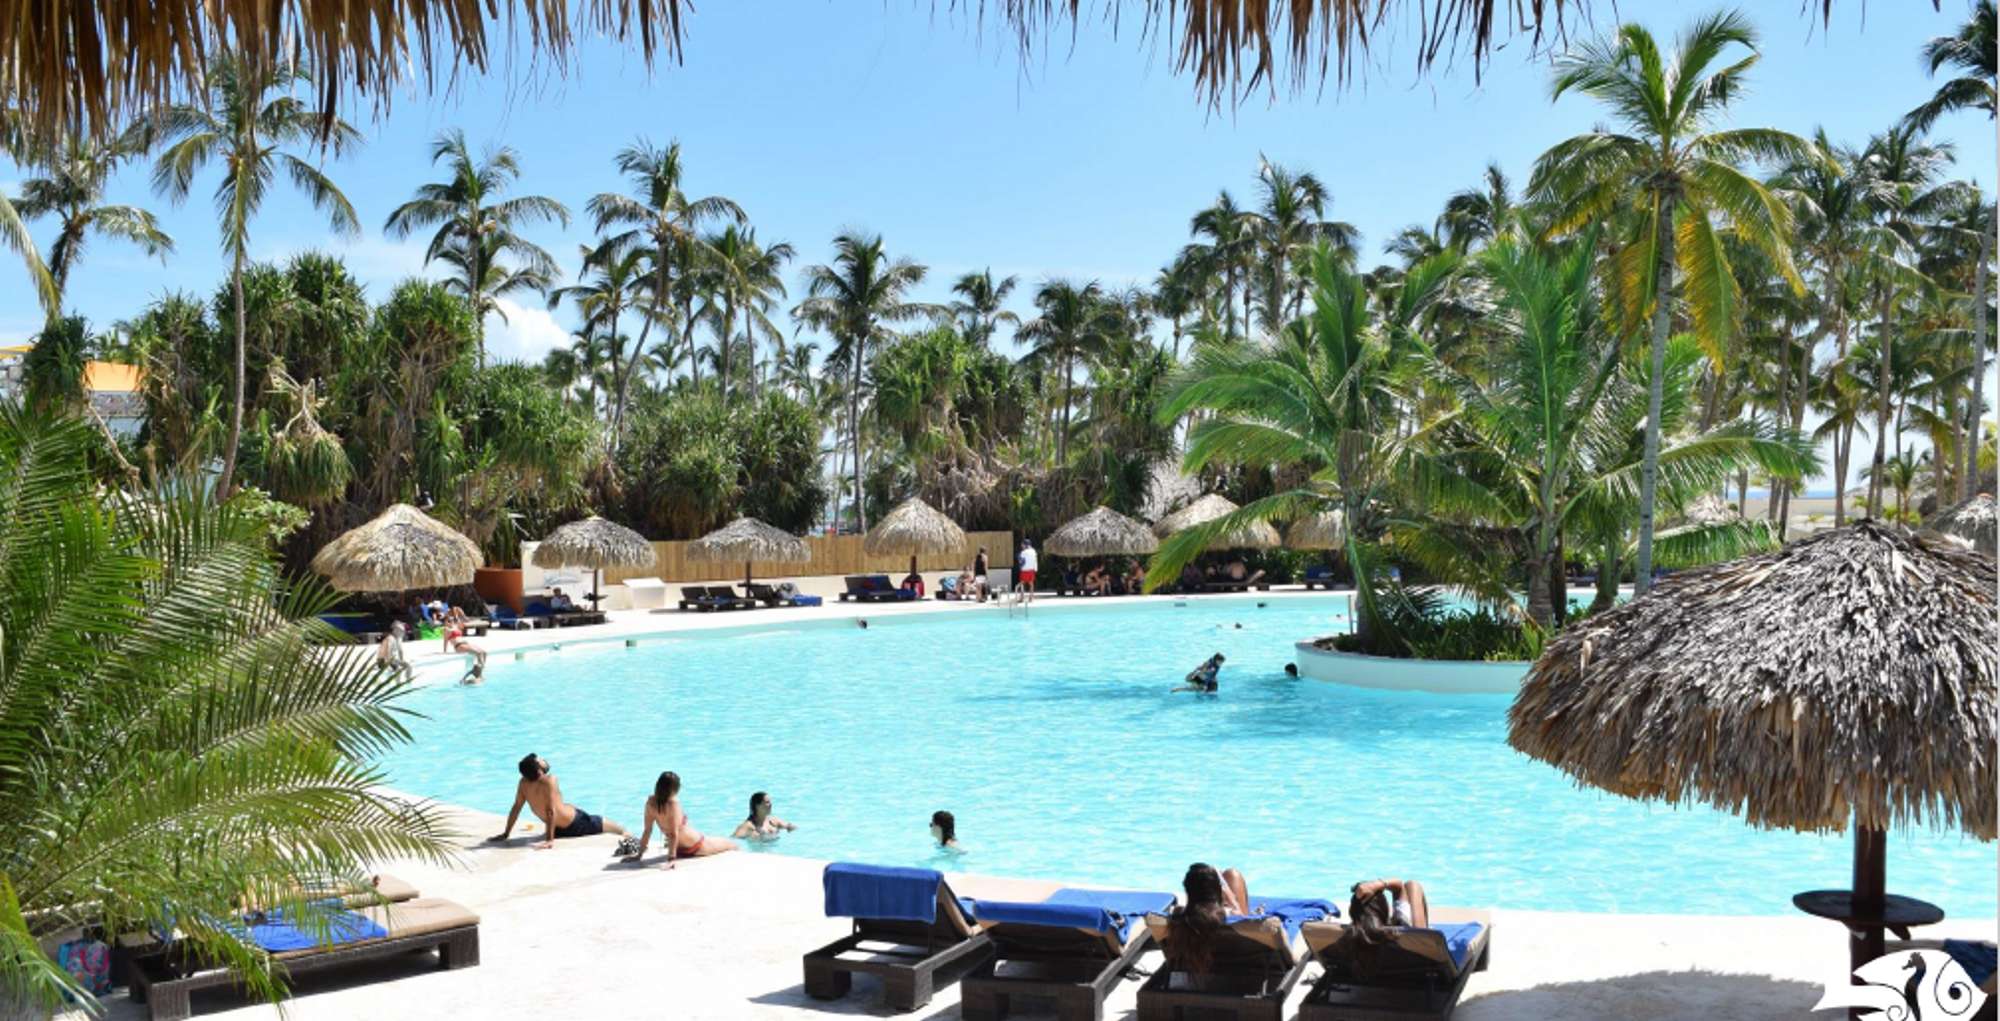 Club Med resort pool